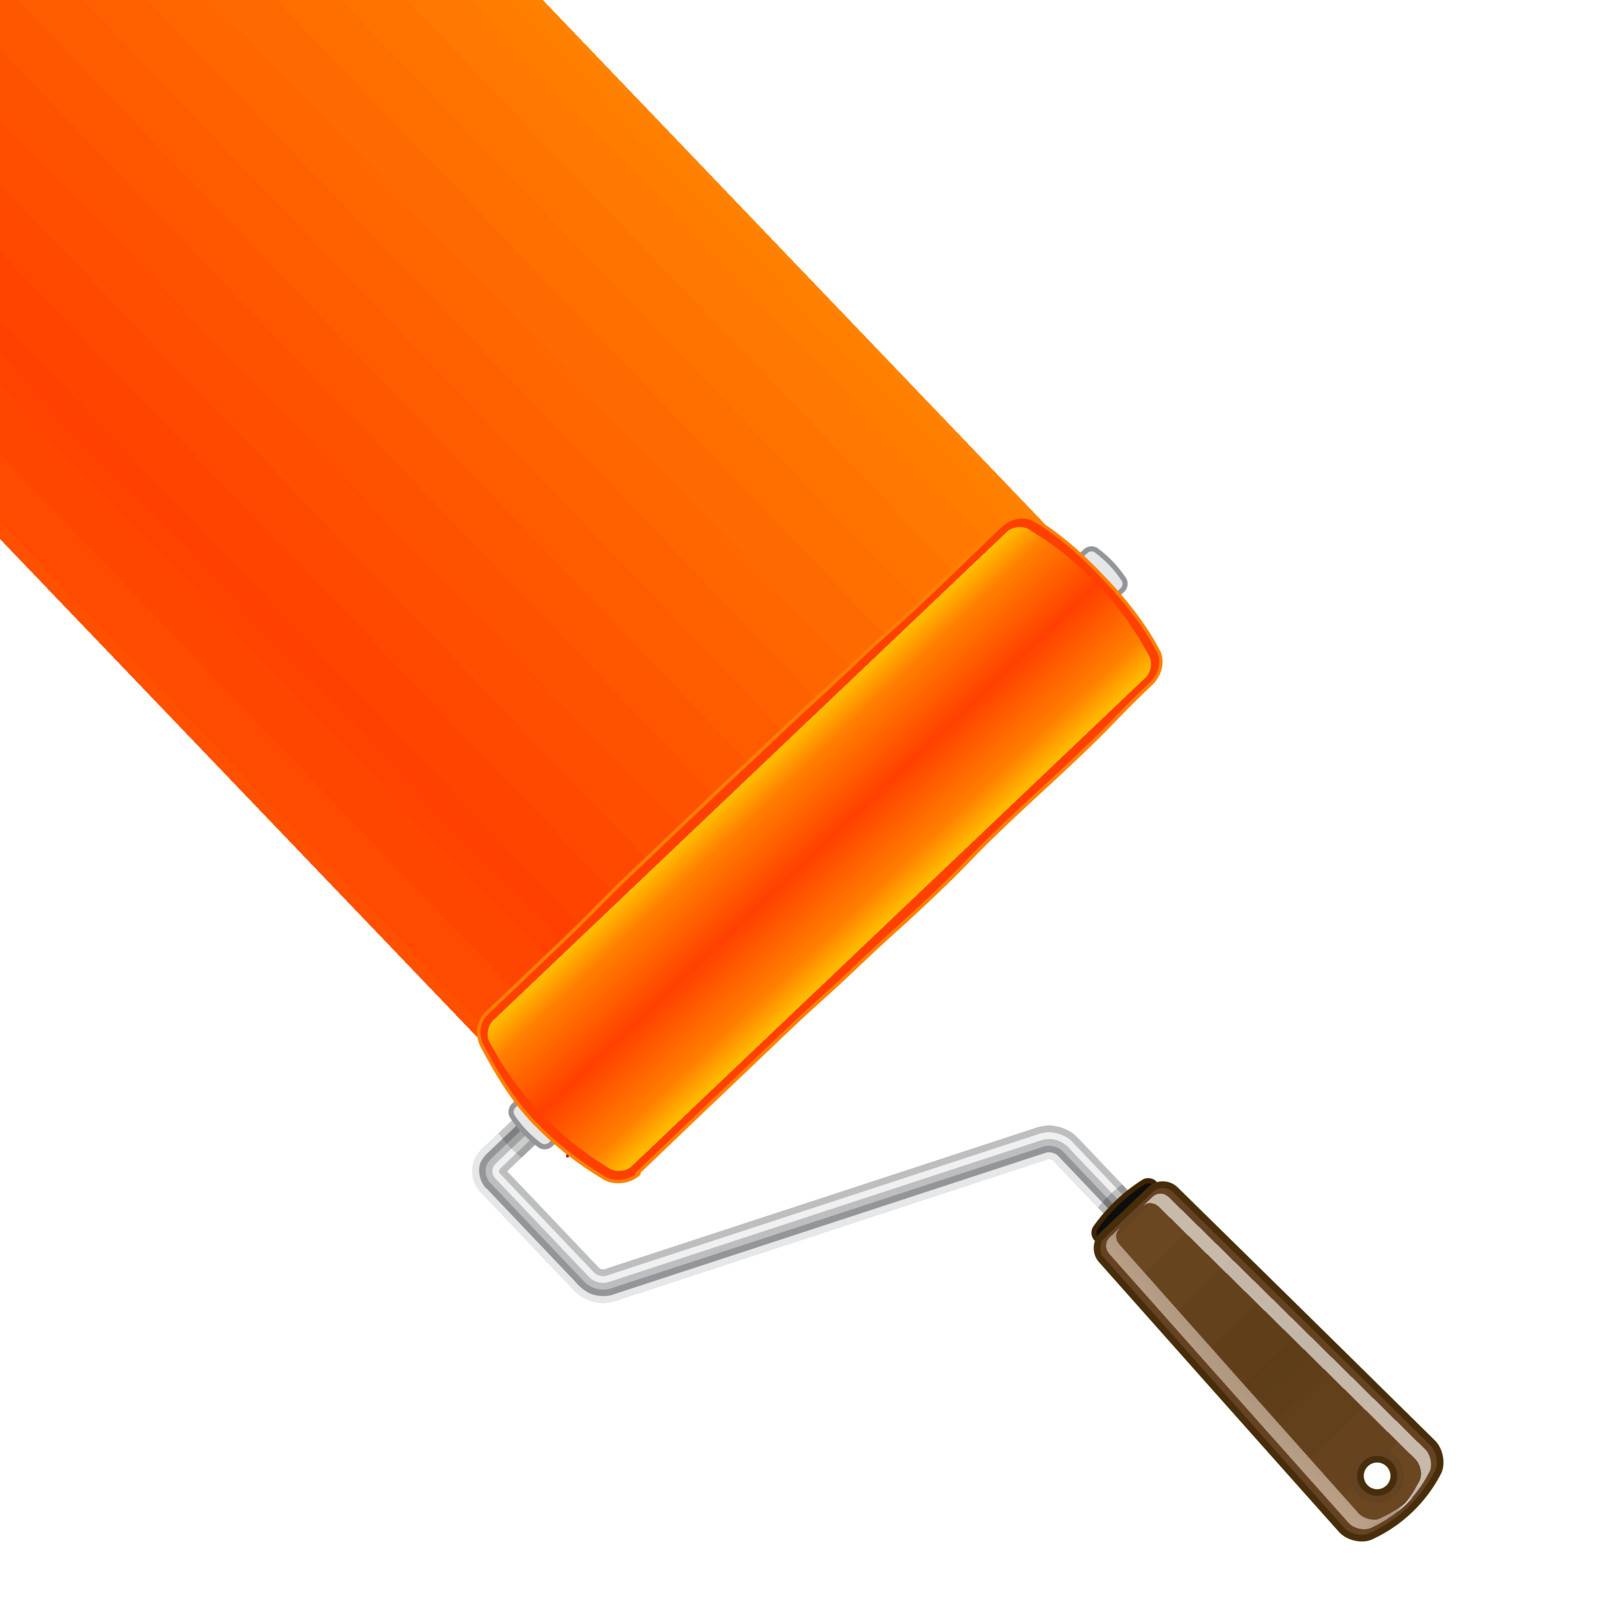 Orange paint roller background